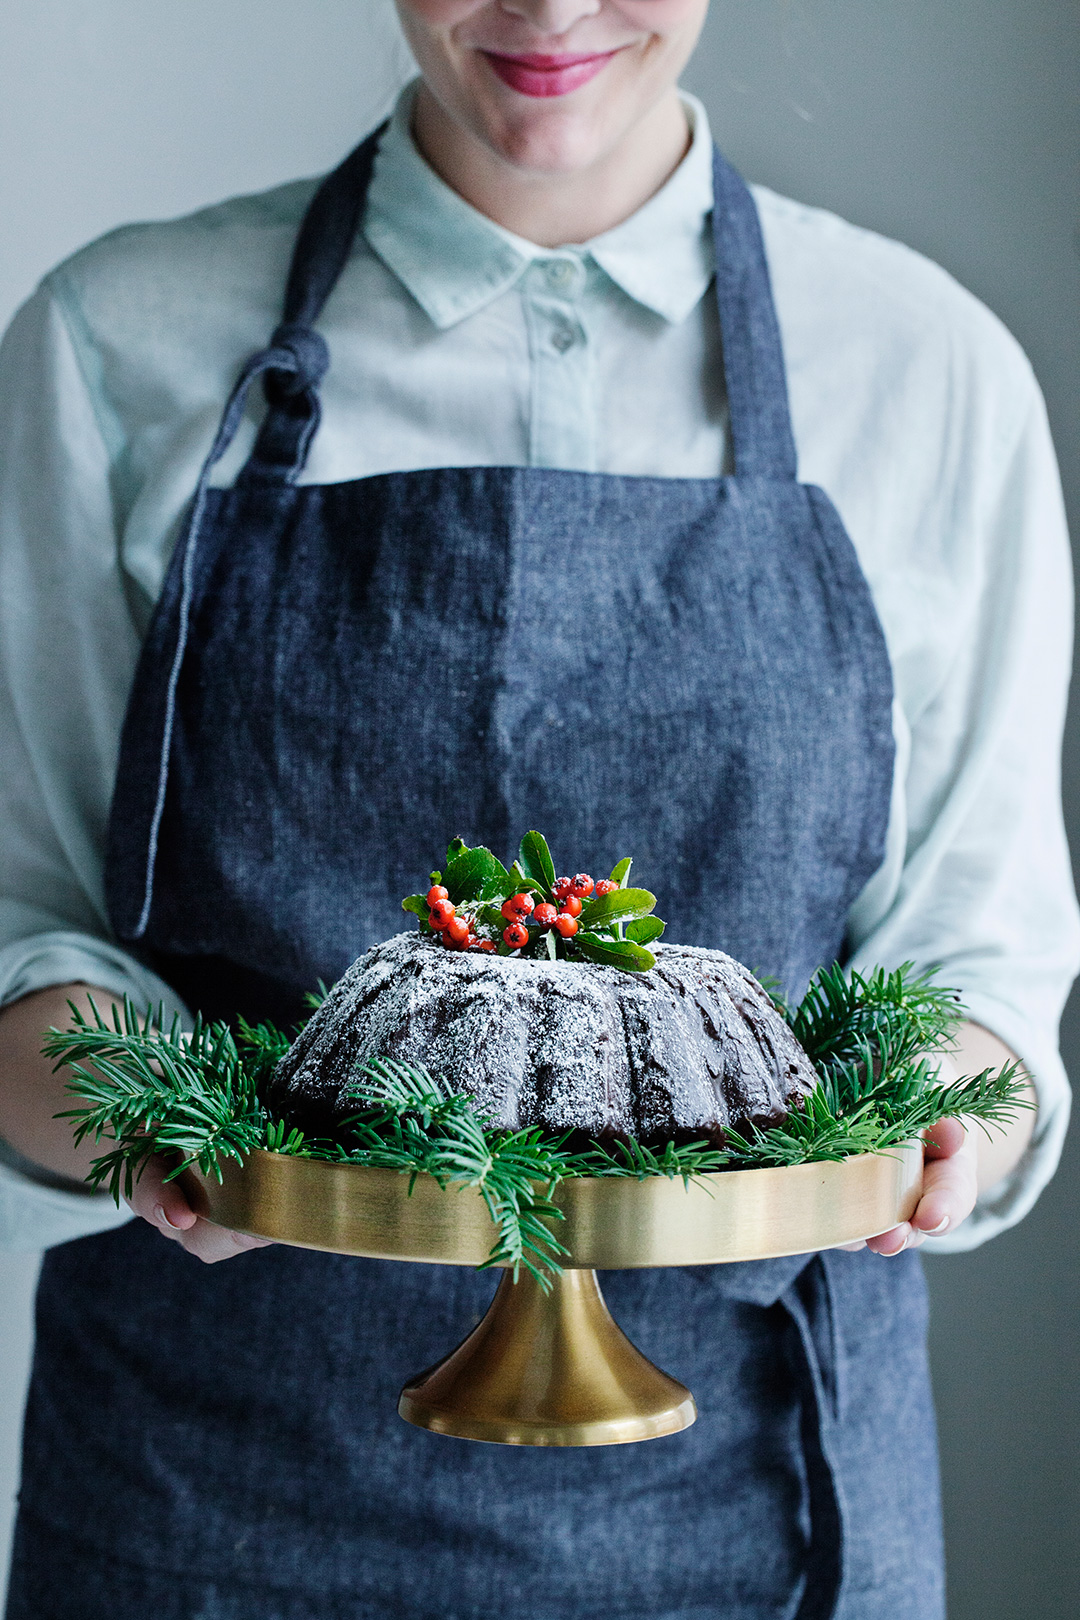 Chocolate Rosemary Bundt Cake. Perfect Holiday Dessert! #modernwifestyle #foodphotography